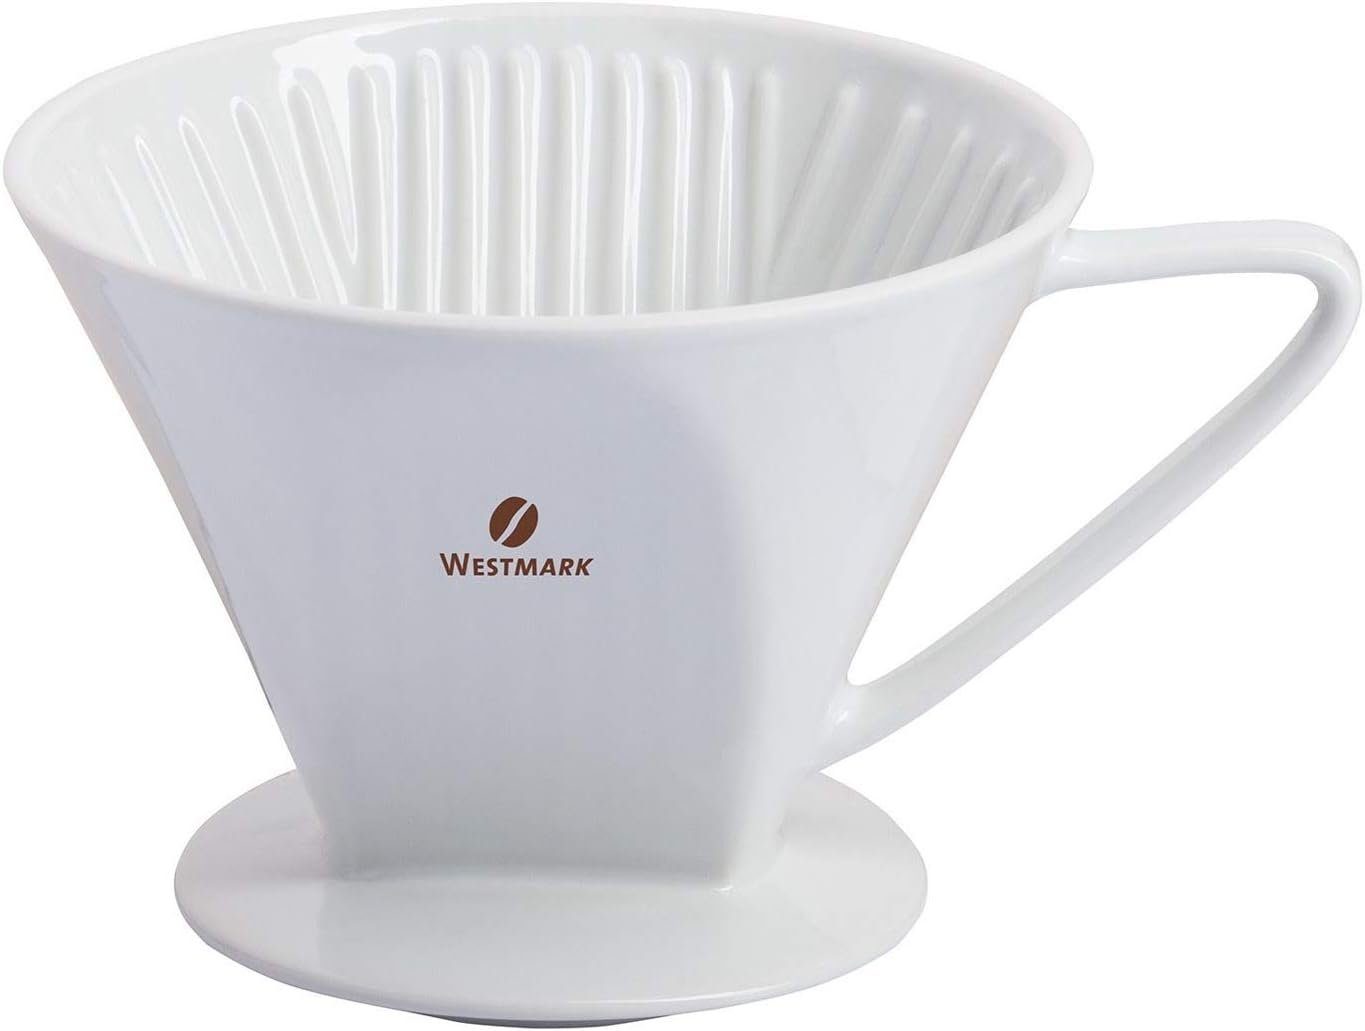 WESTMARK Permanentfilter Porzellan-Kaffeefilter/Filterhalter, Filtergröße 4